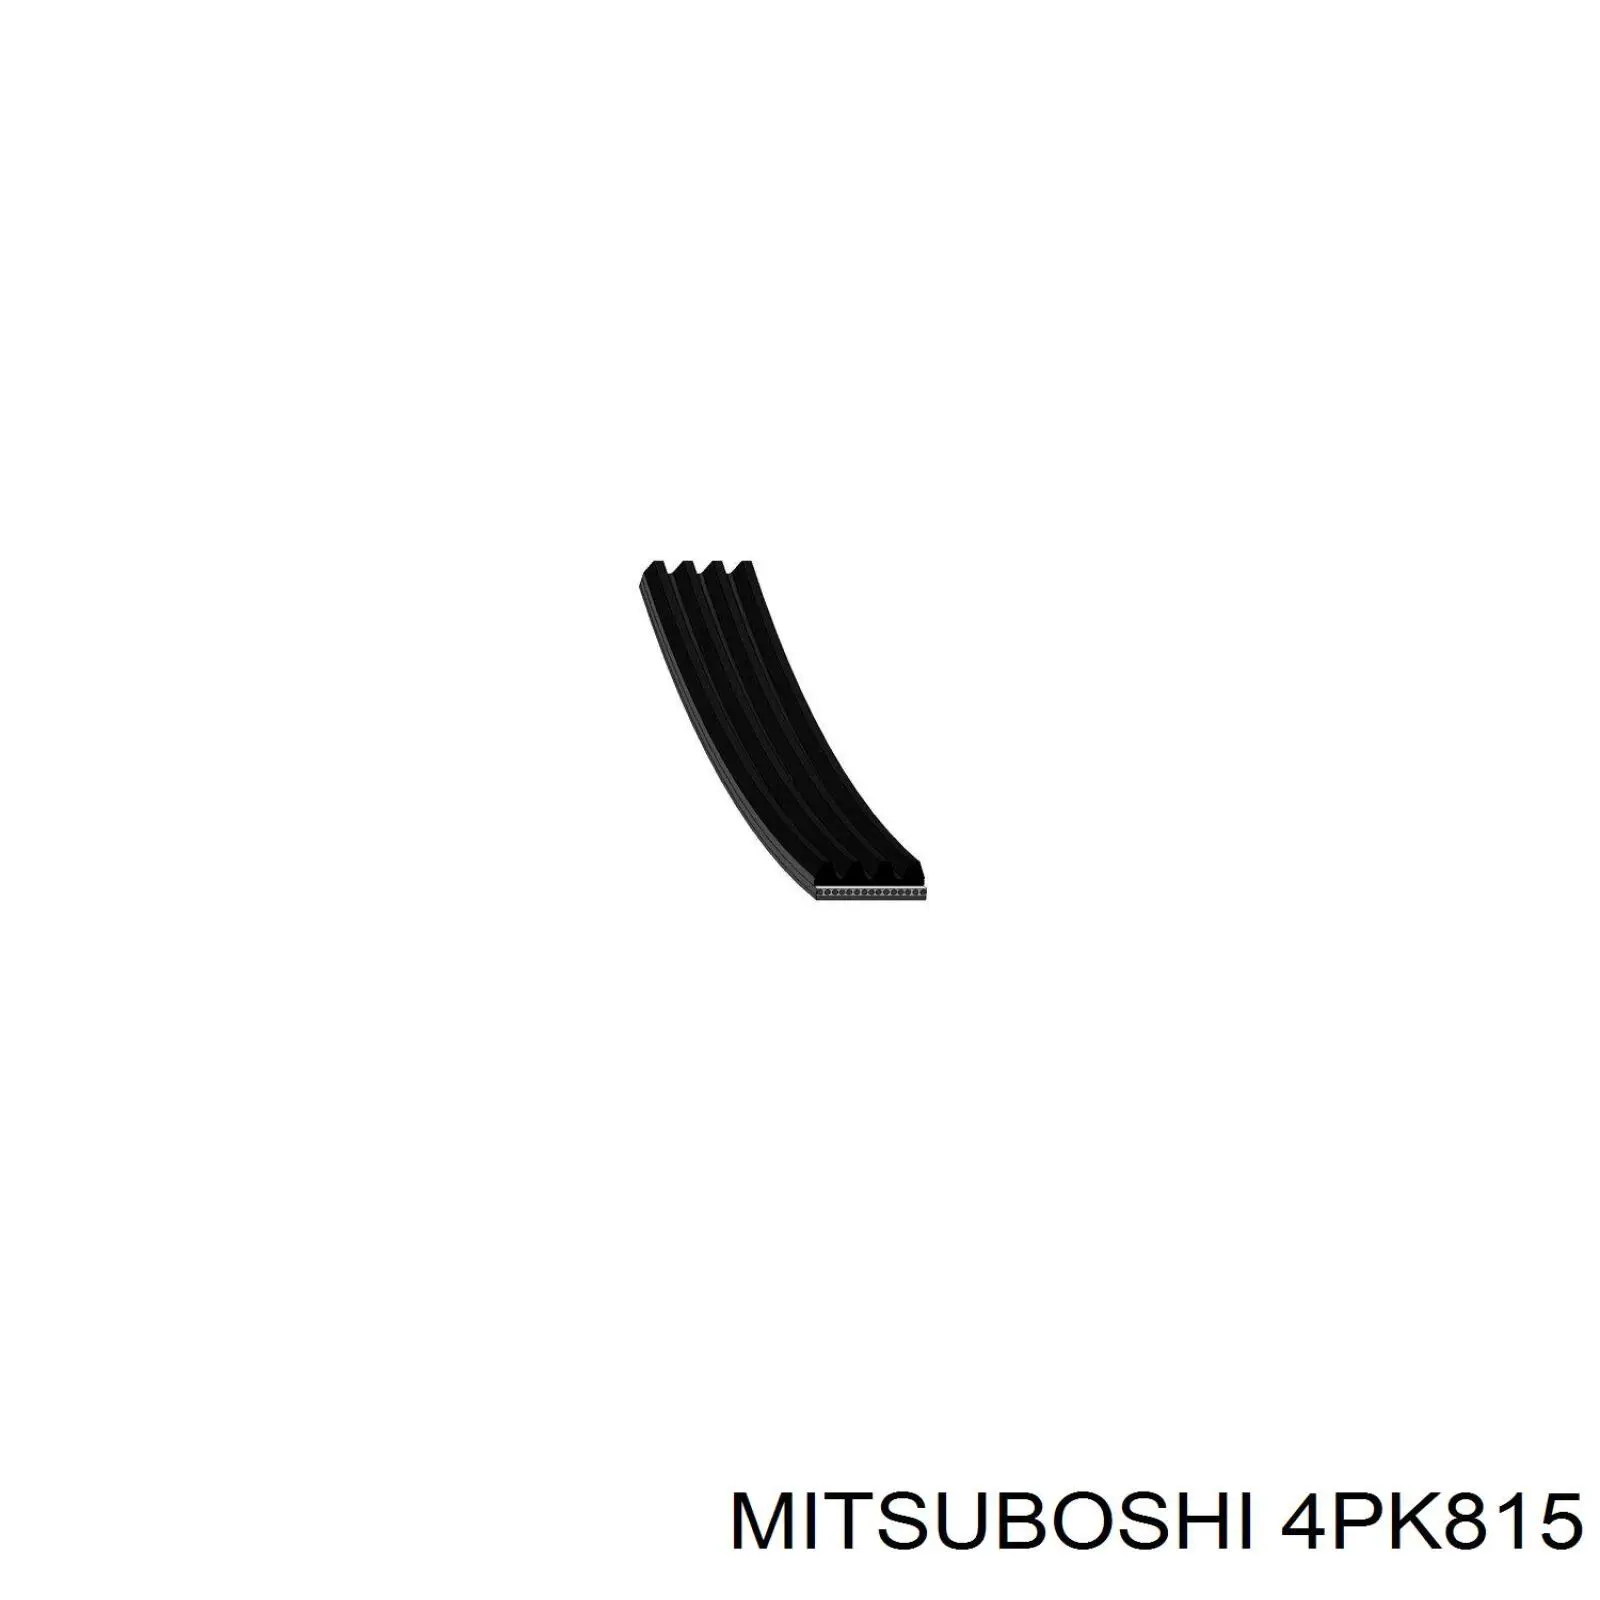 4PK815 Mitsuboshi ремень генератора